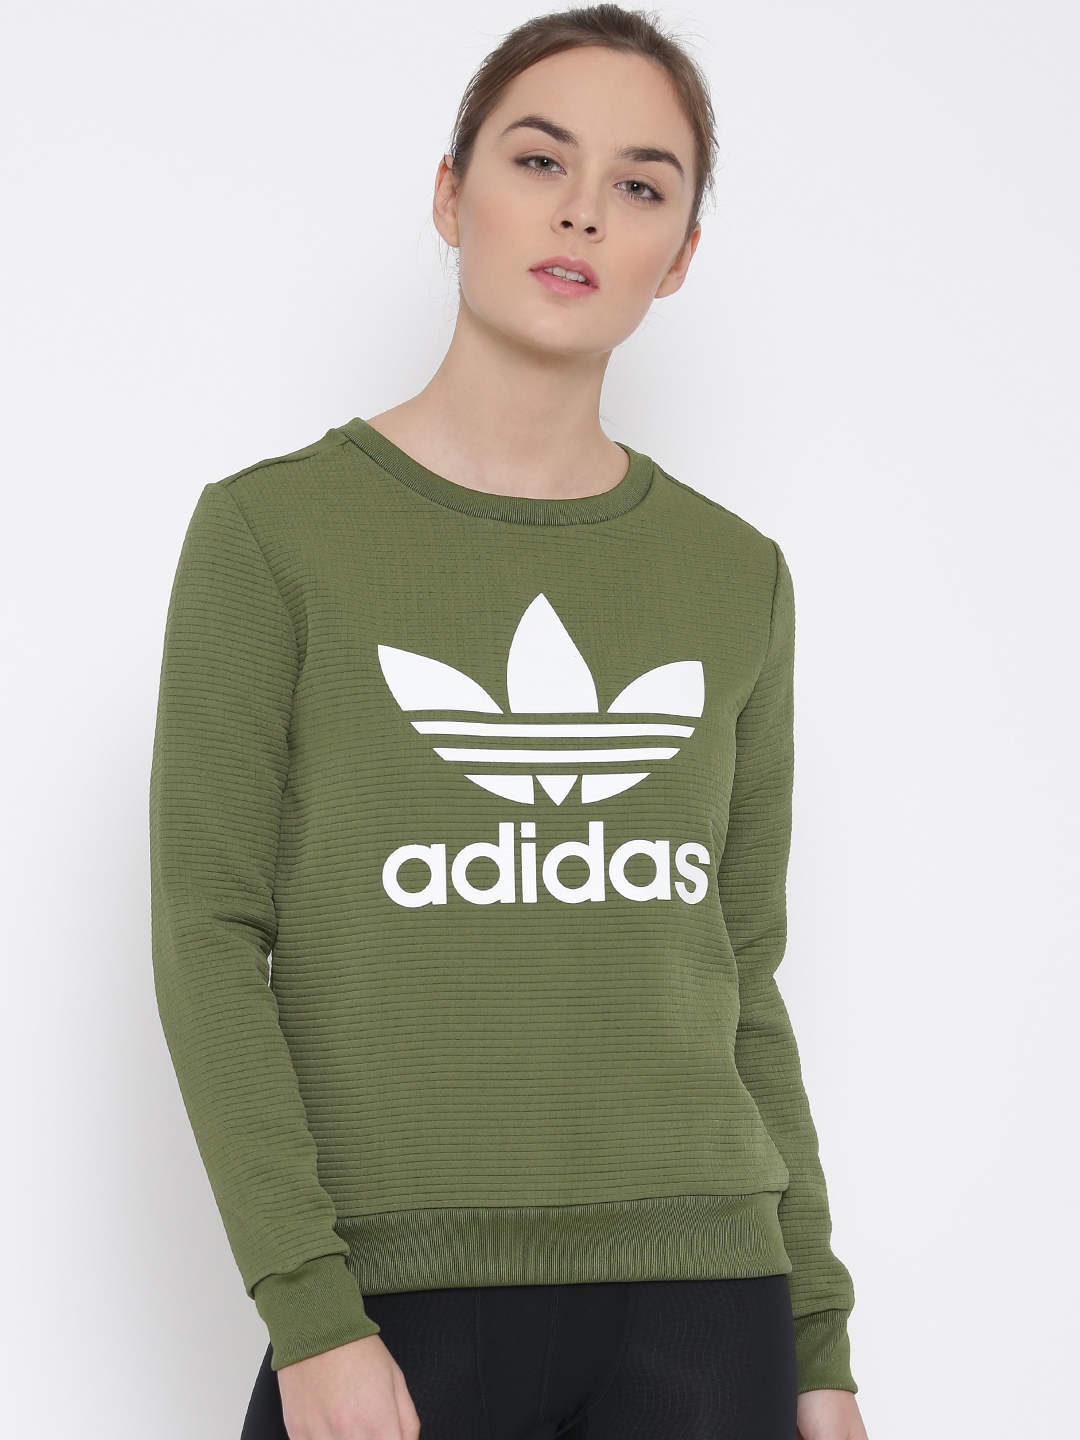 womens green adidas sweatshirt